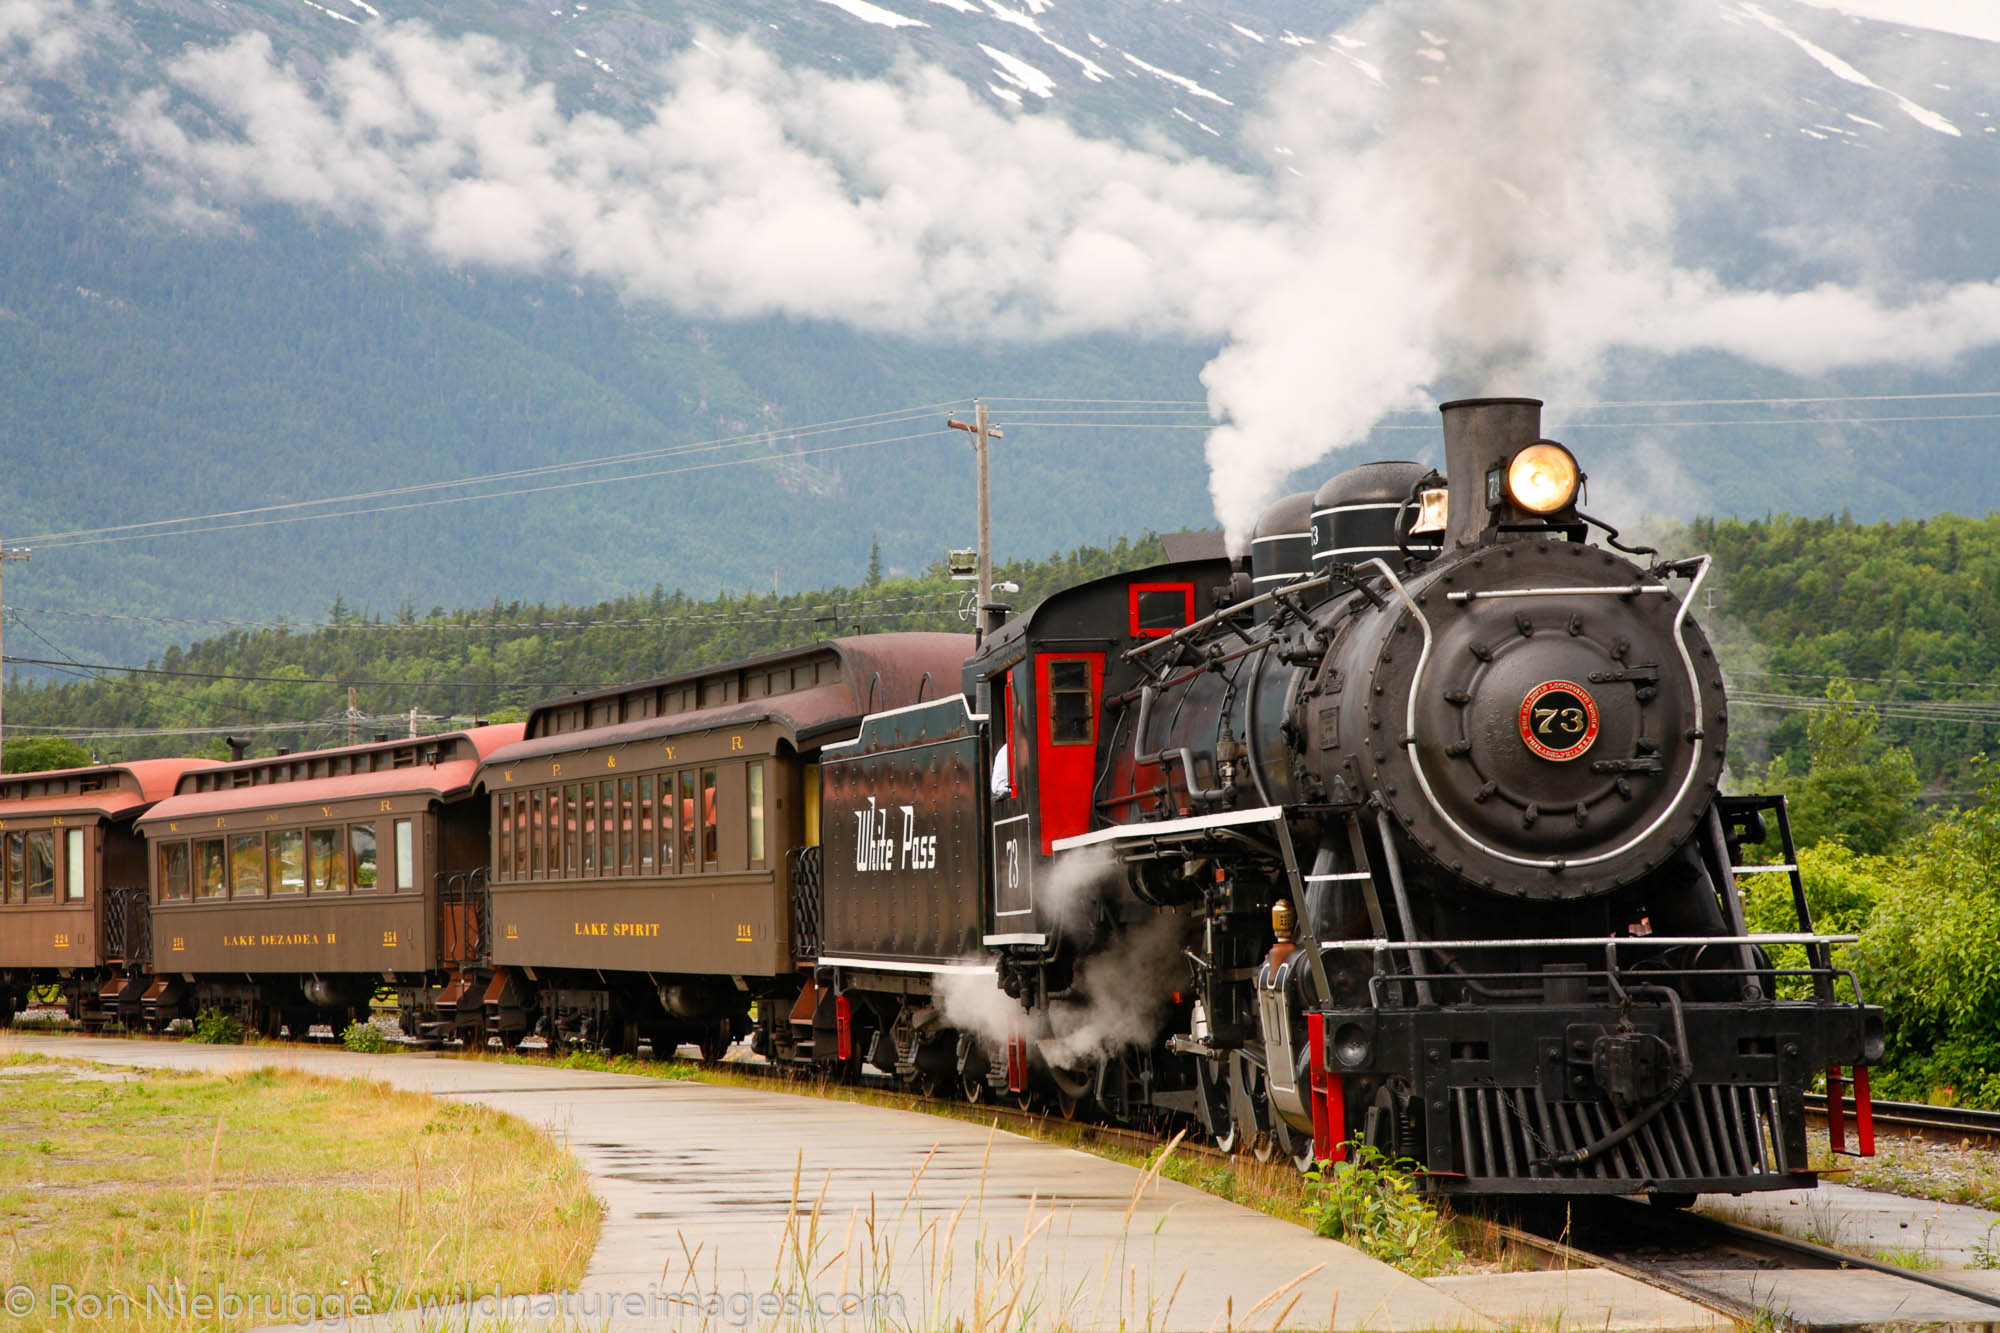 Historic steam engine from White Pass Yukon Route Railroad Skagway, Alaska.